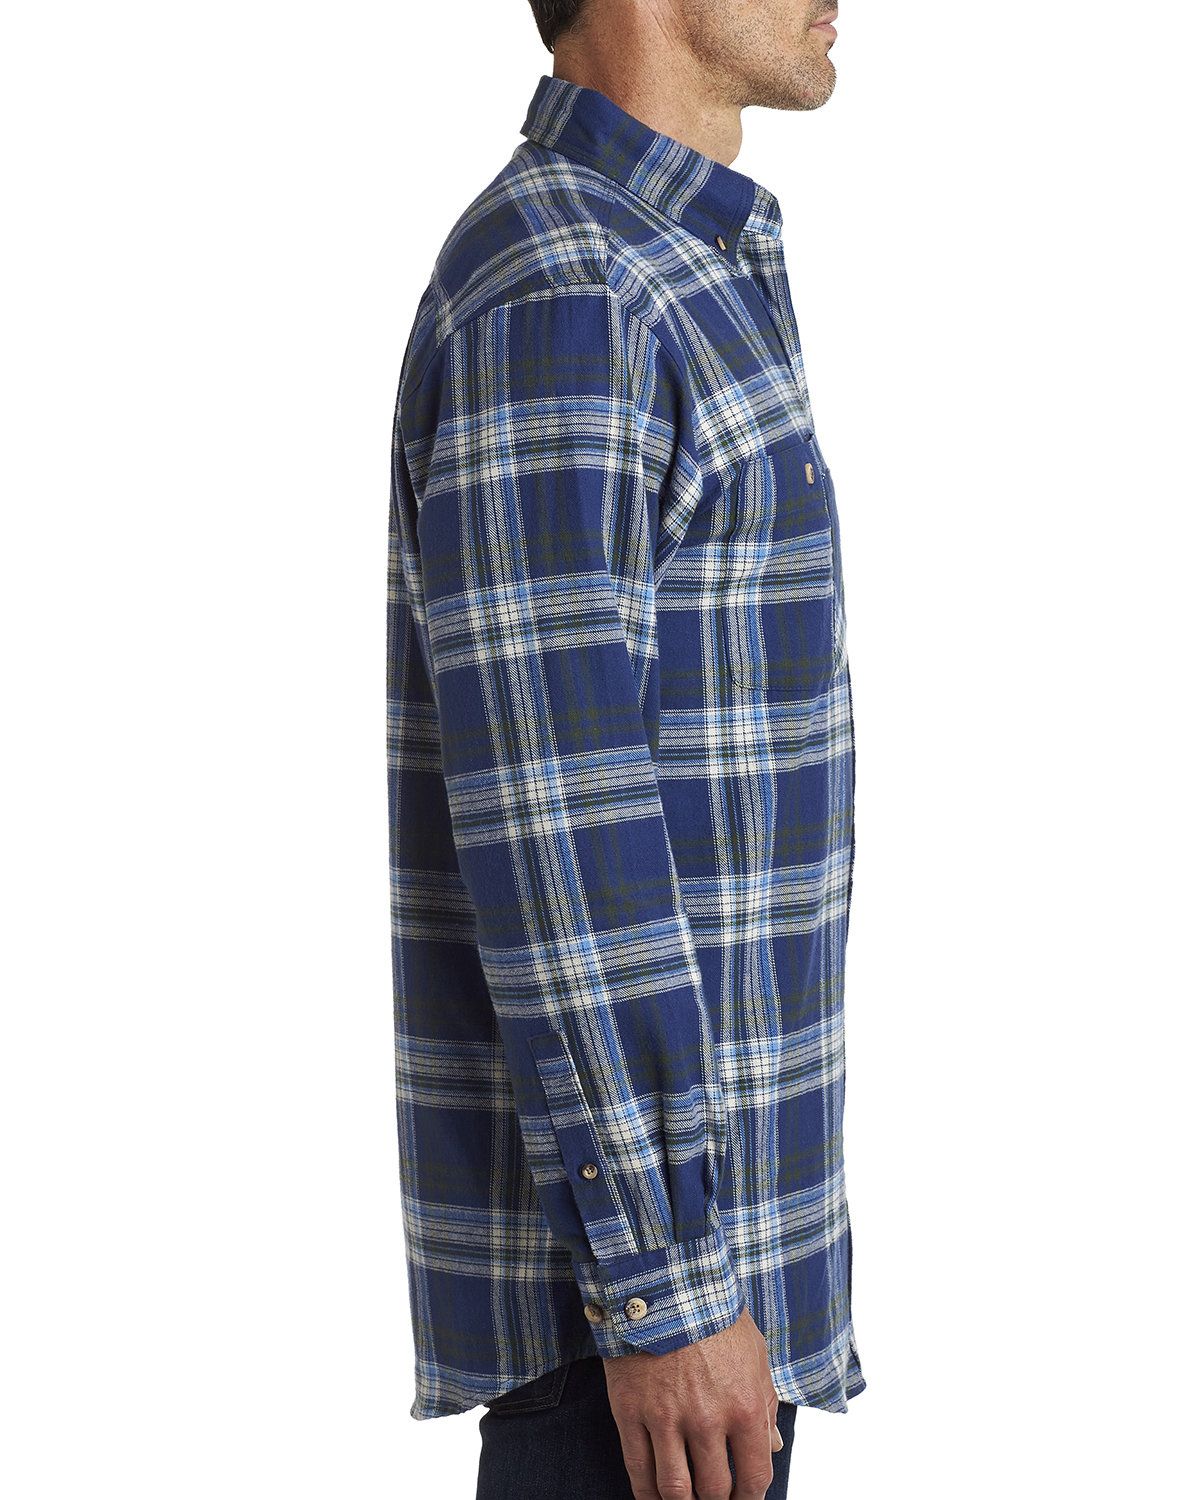 'Backpacker BP7001 Men's Yarn-Dyed Flannel Shirt'